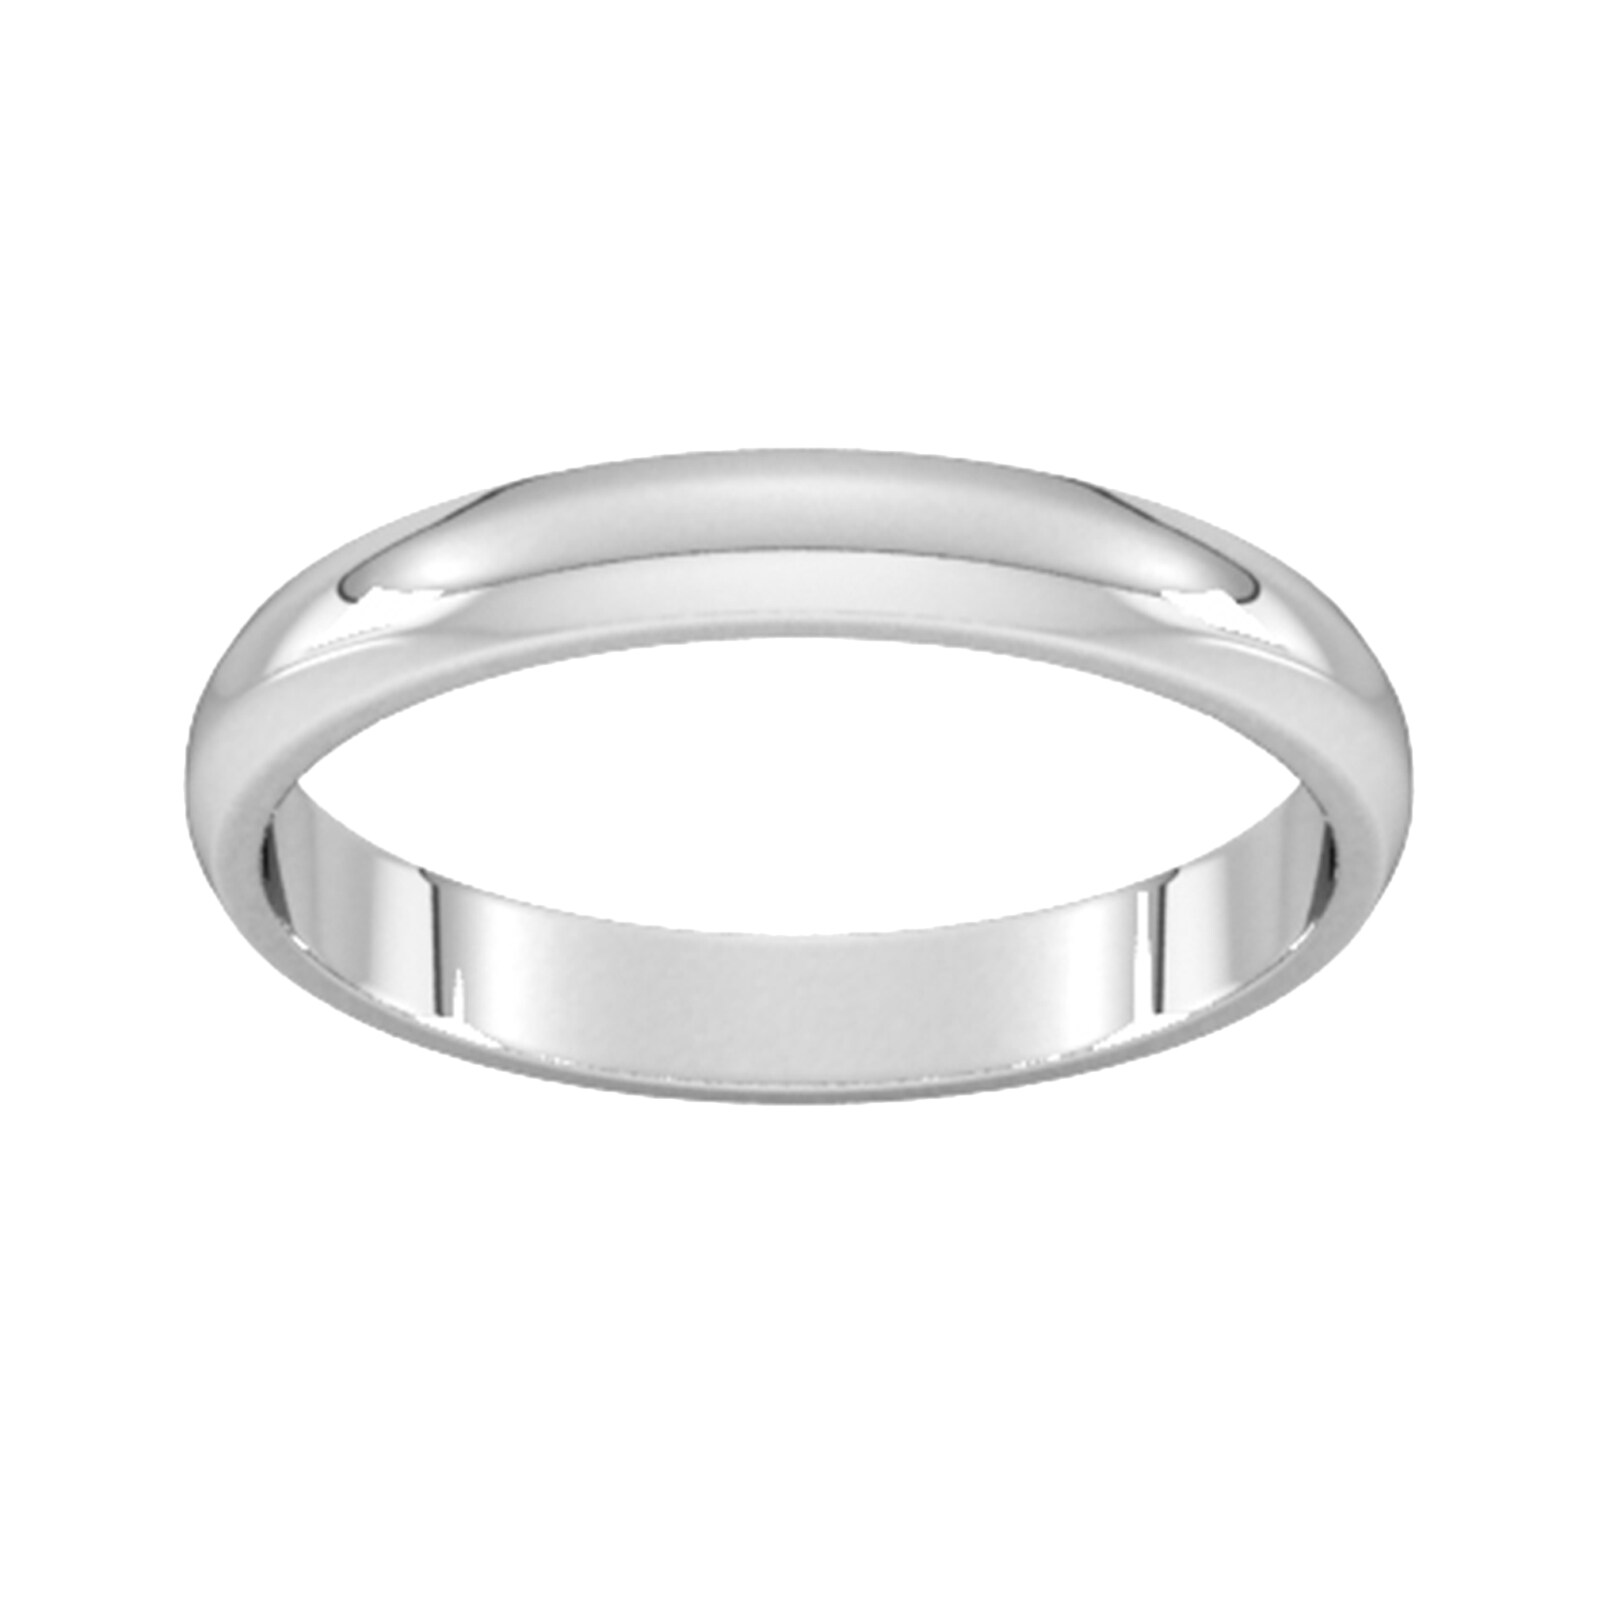 3mm D Shape Standard Wedding Ring In 950 Palladium - Ring Size Q